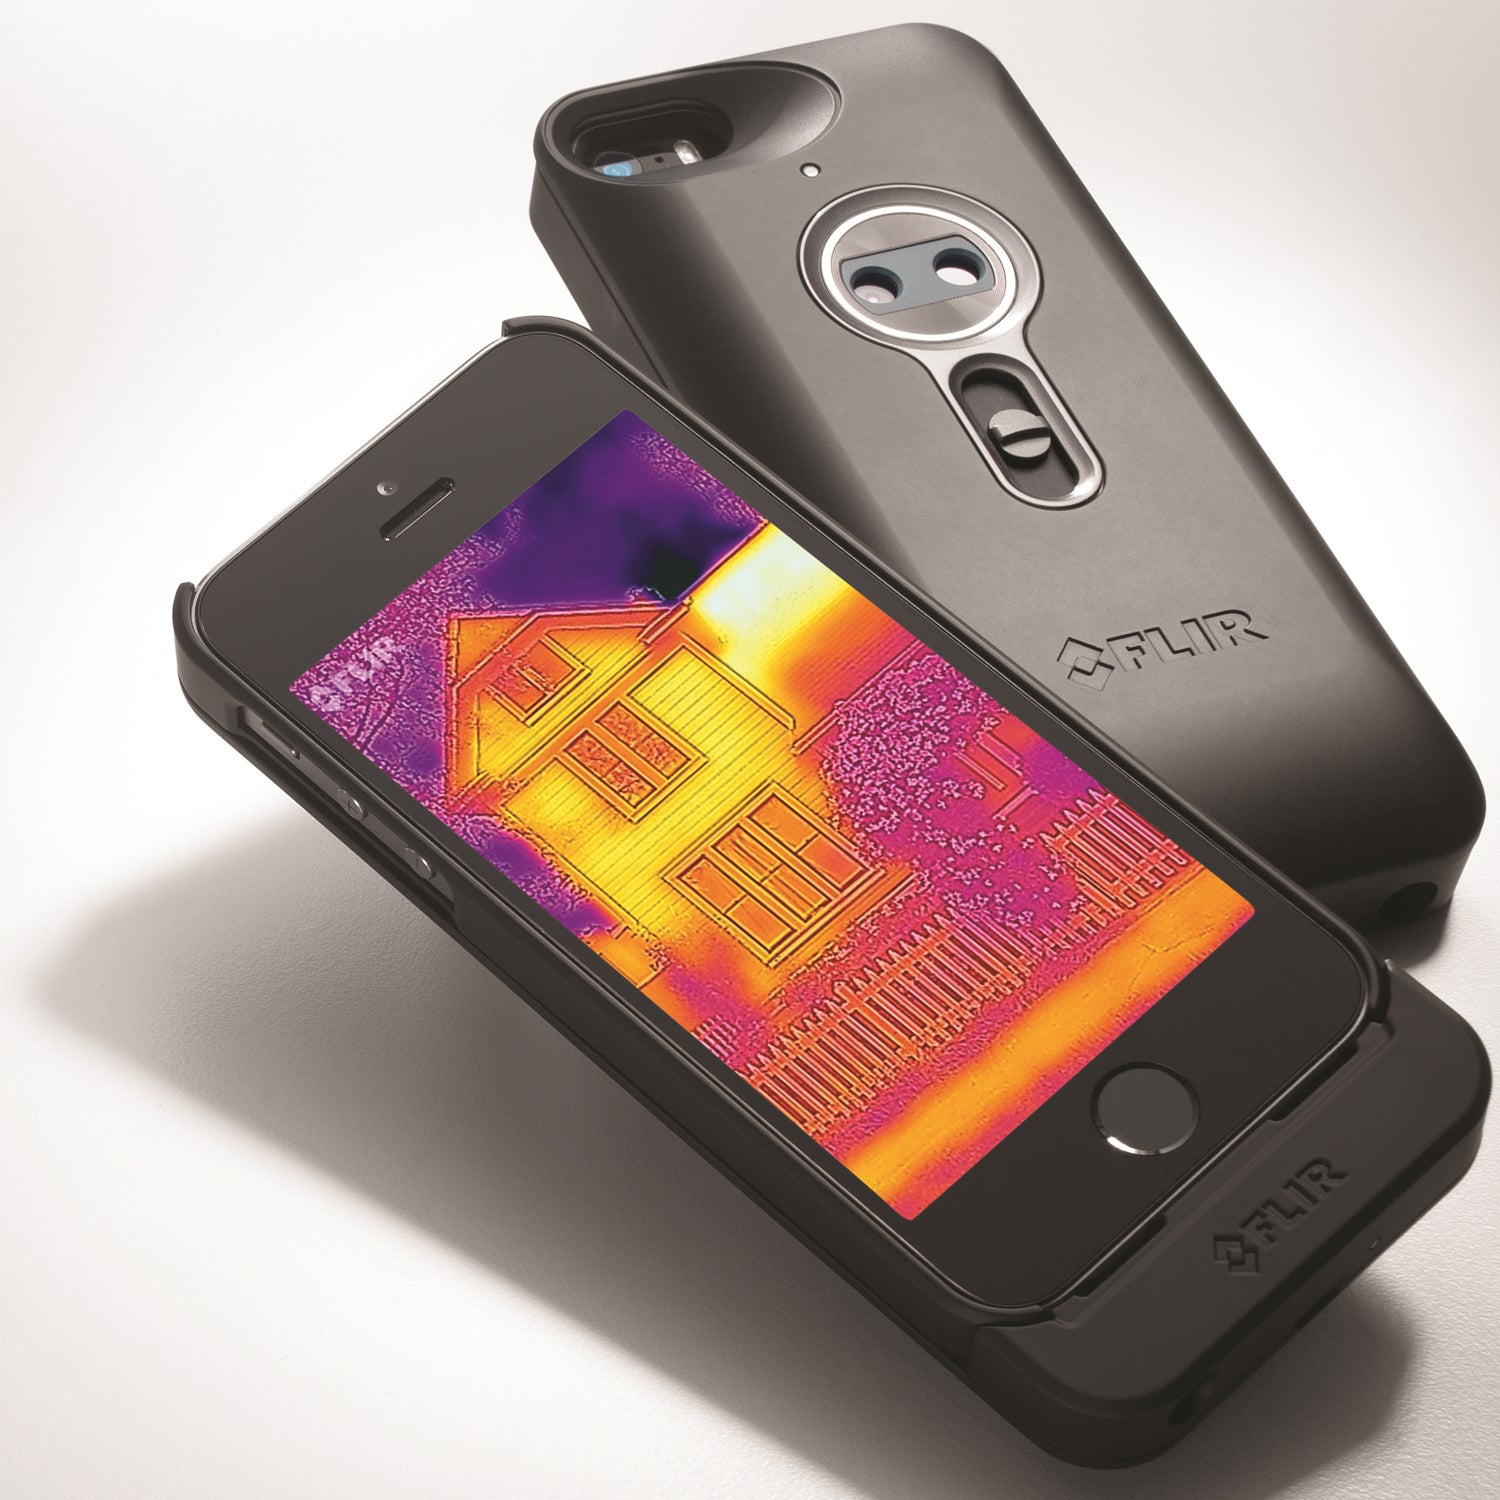 Flir One Infrared iPhone Camera - Outside Online